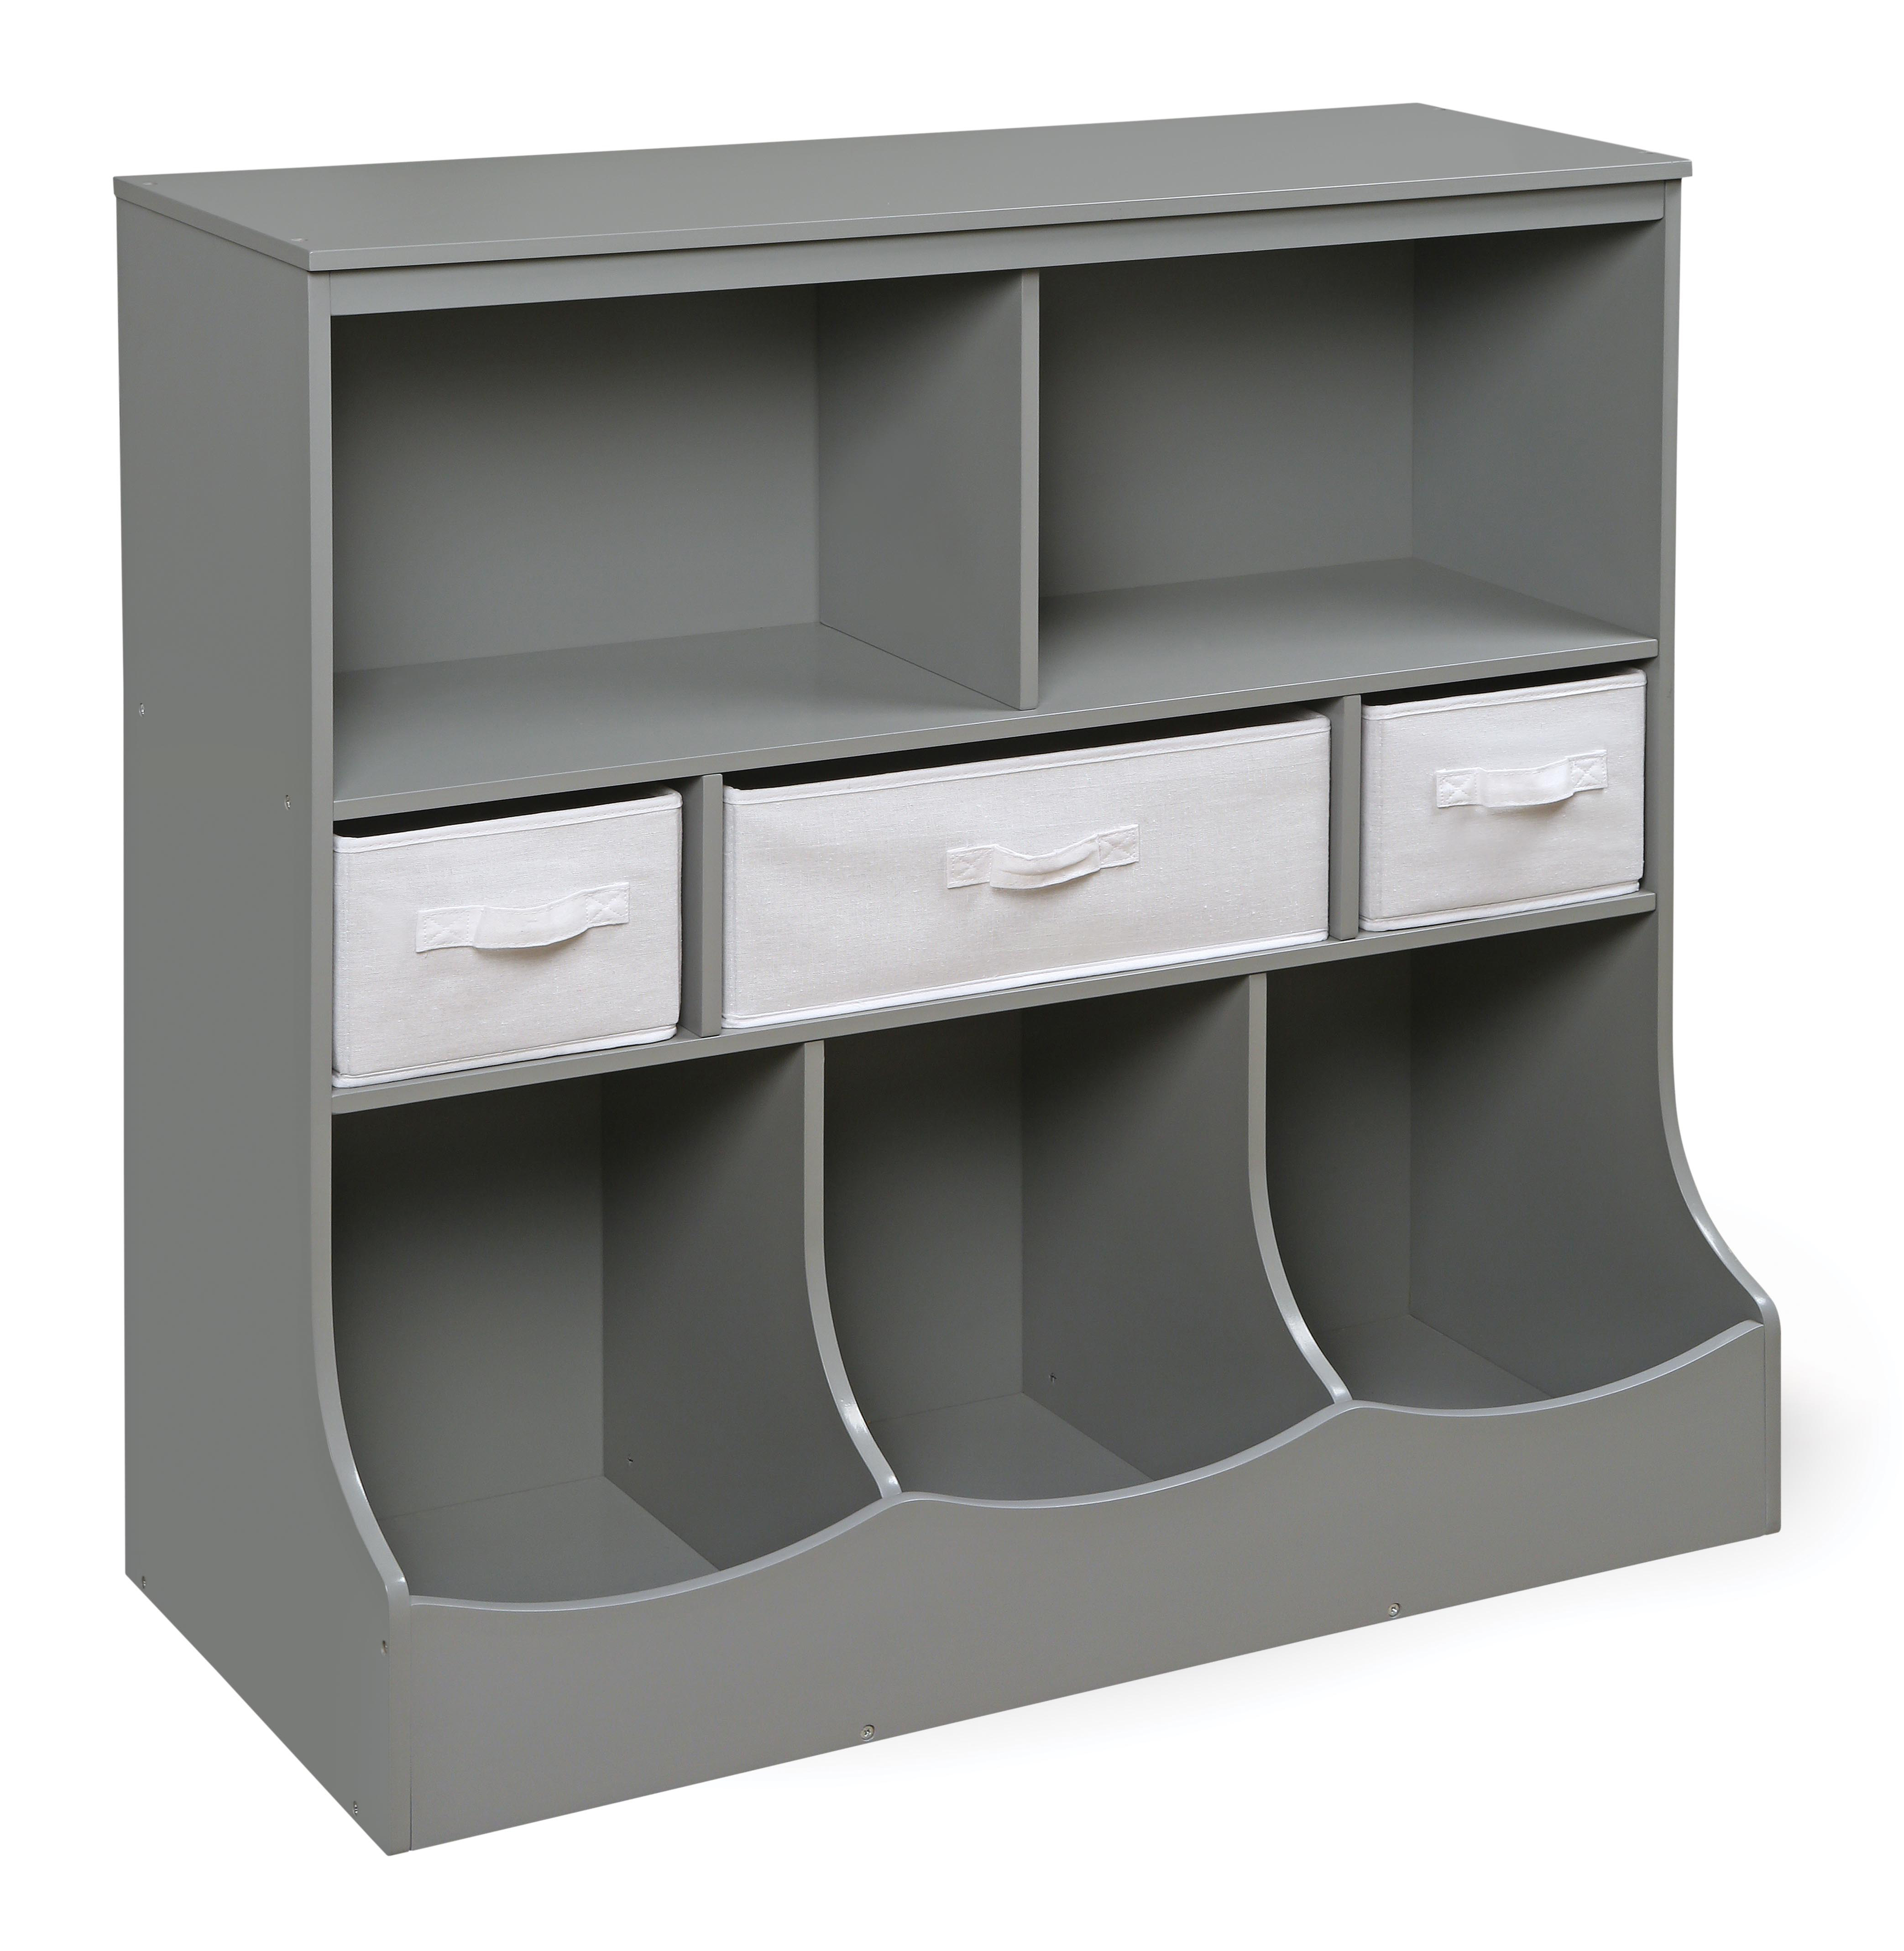 Combo Bin Storage Unit with Three Baskets - Gray